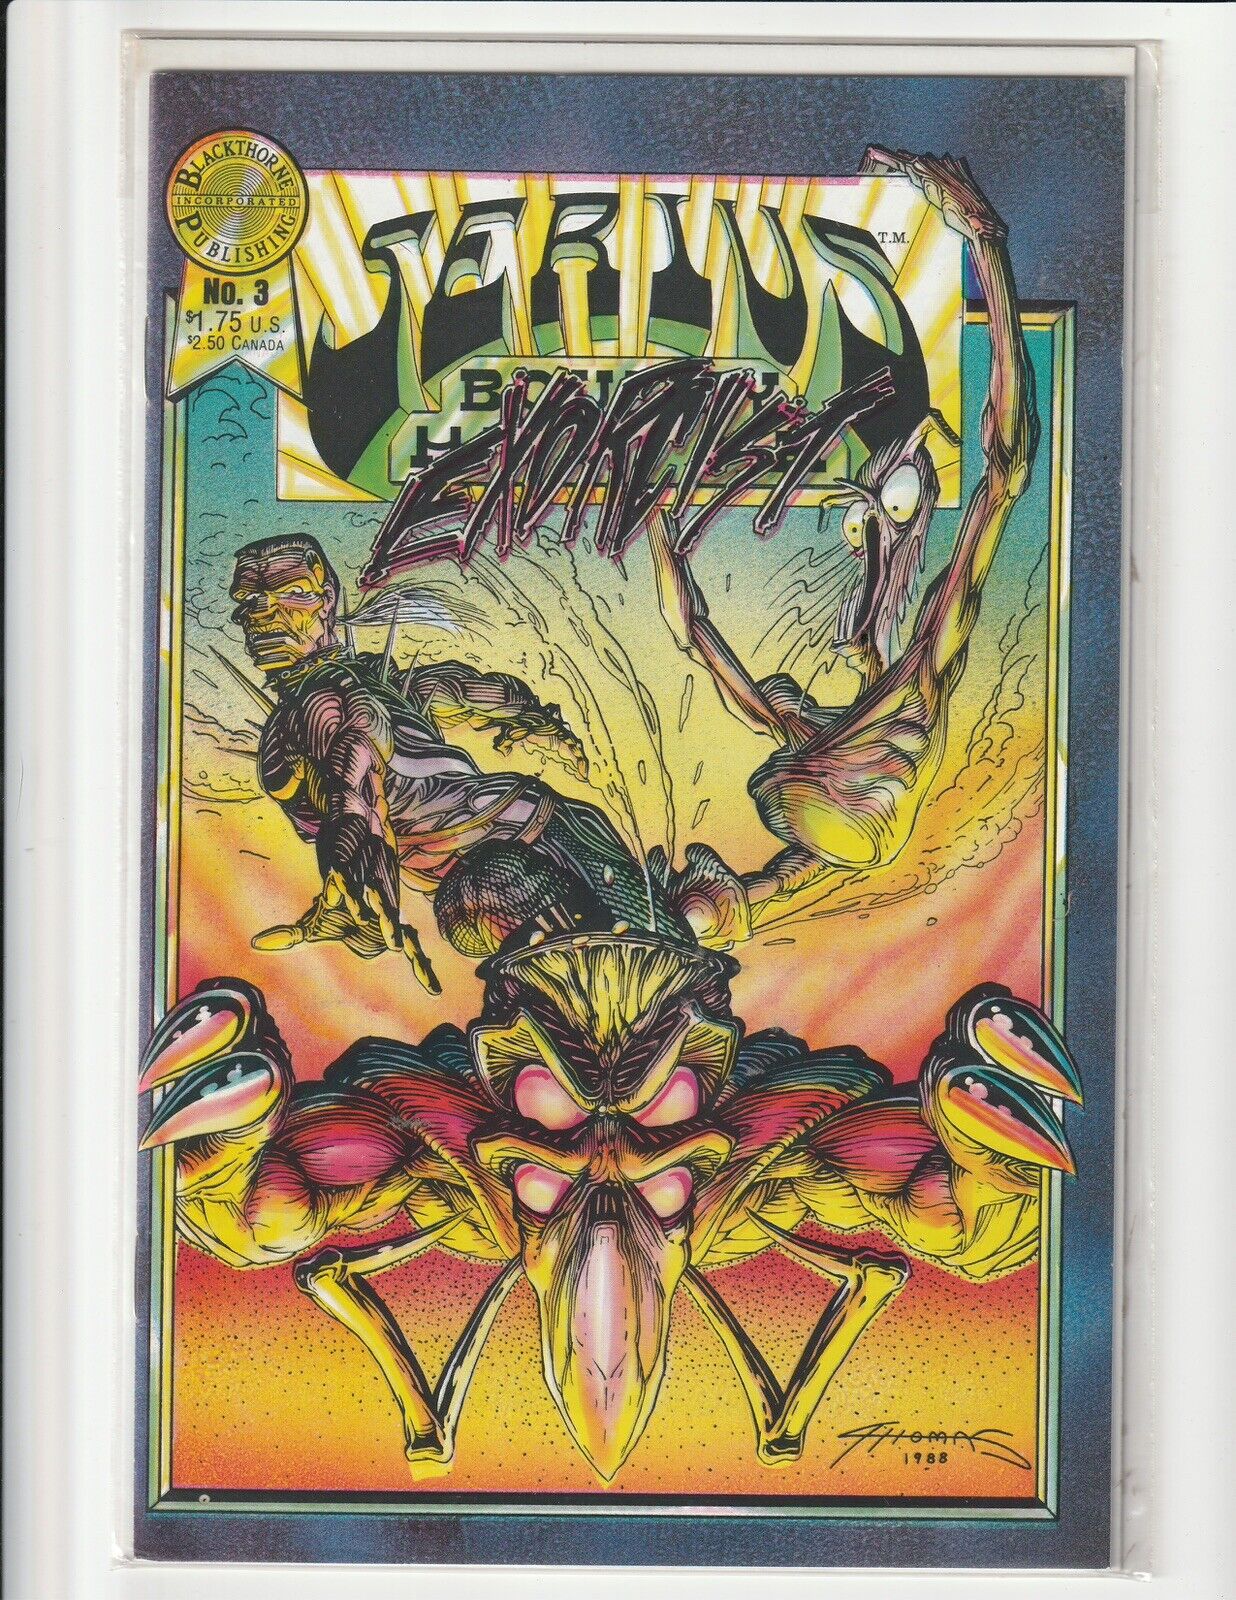 Serius Bounty Hunter #3 - Blackthorne Comics 1987